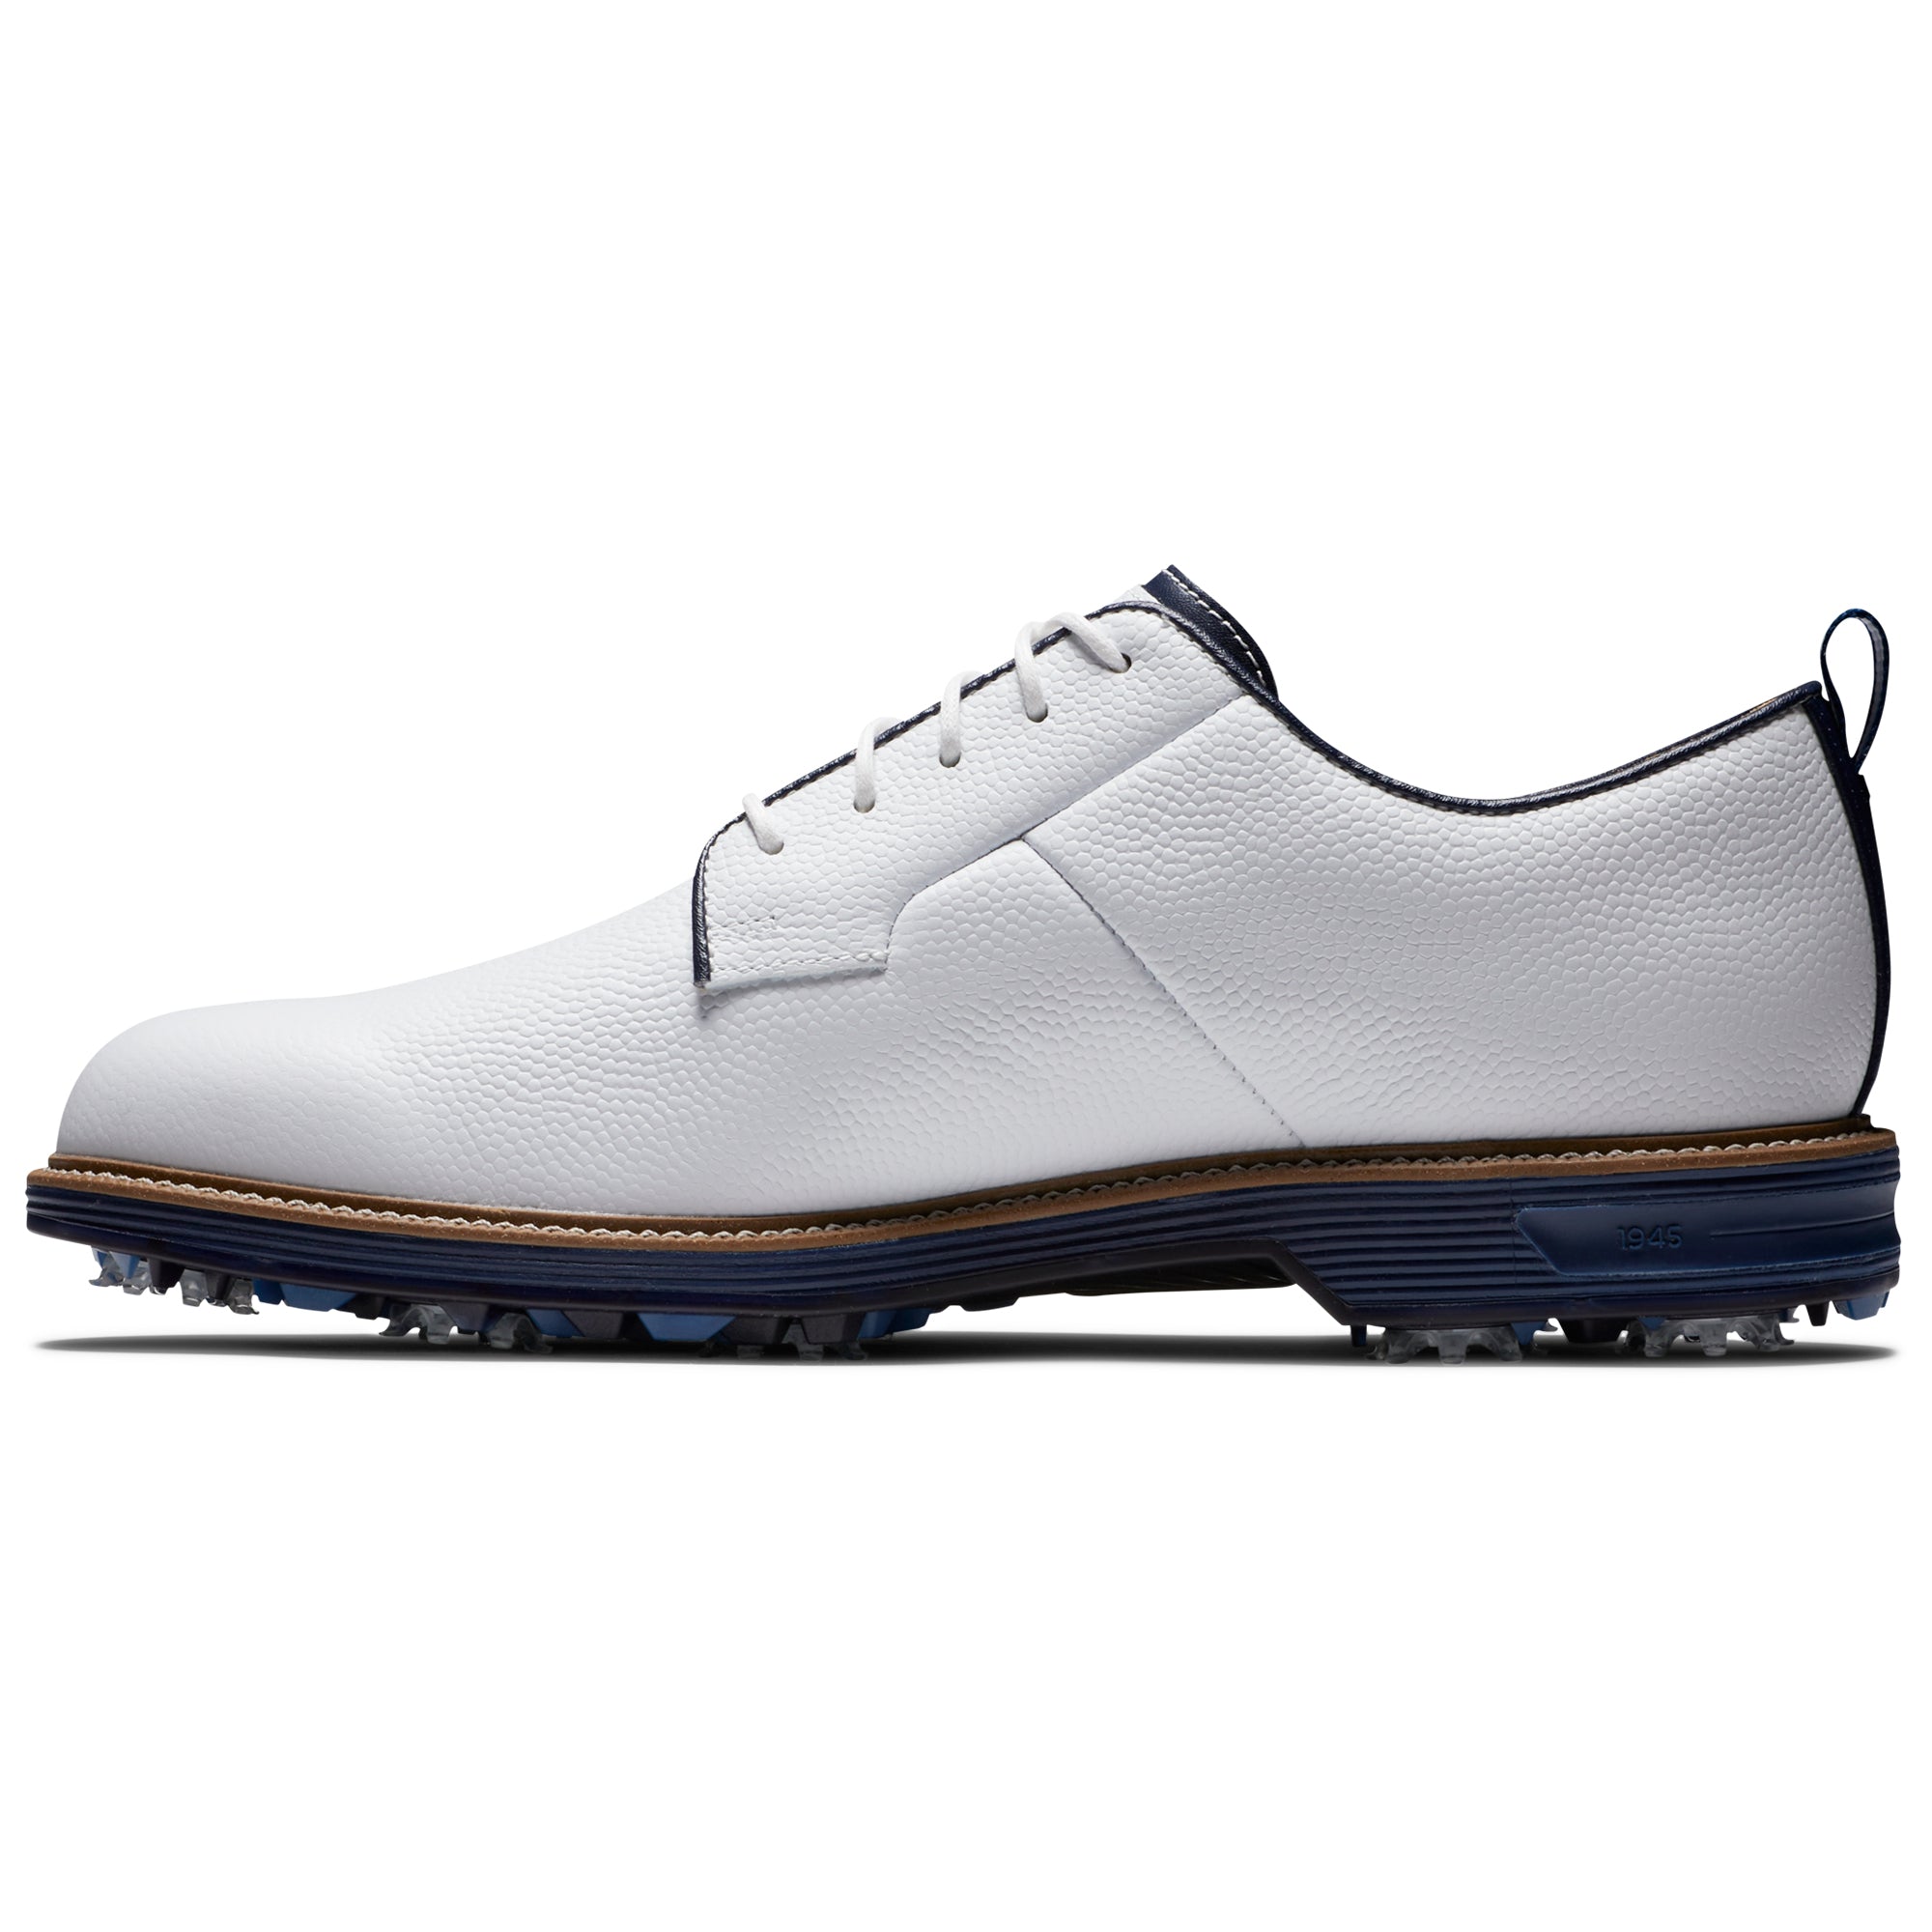 footjoy-premiere-series-field-golf-shoes-54396-white-navy